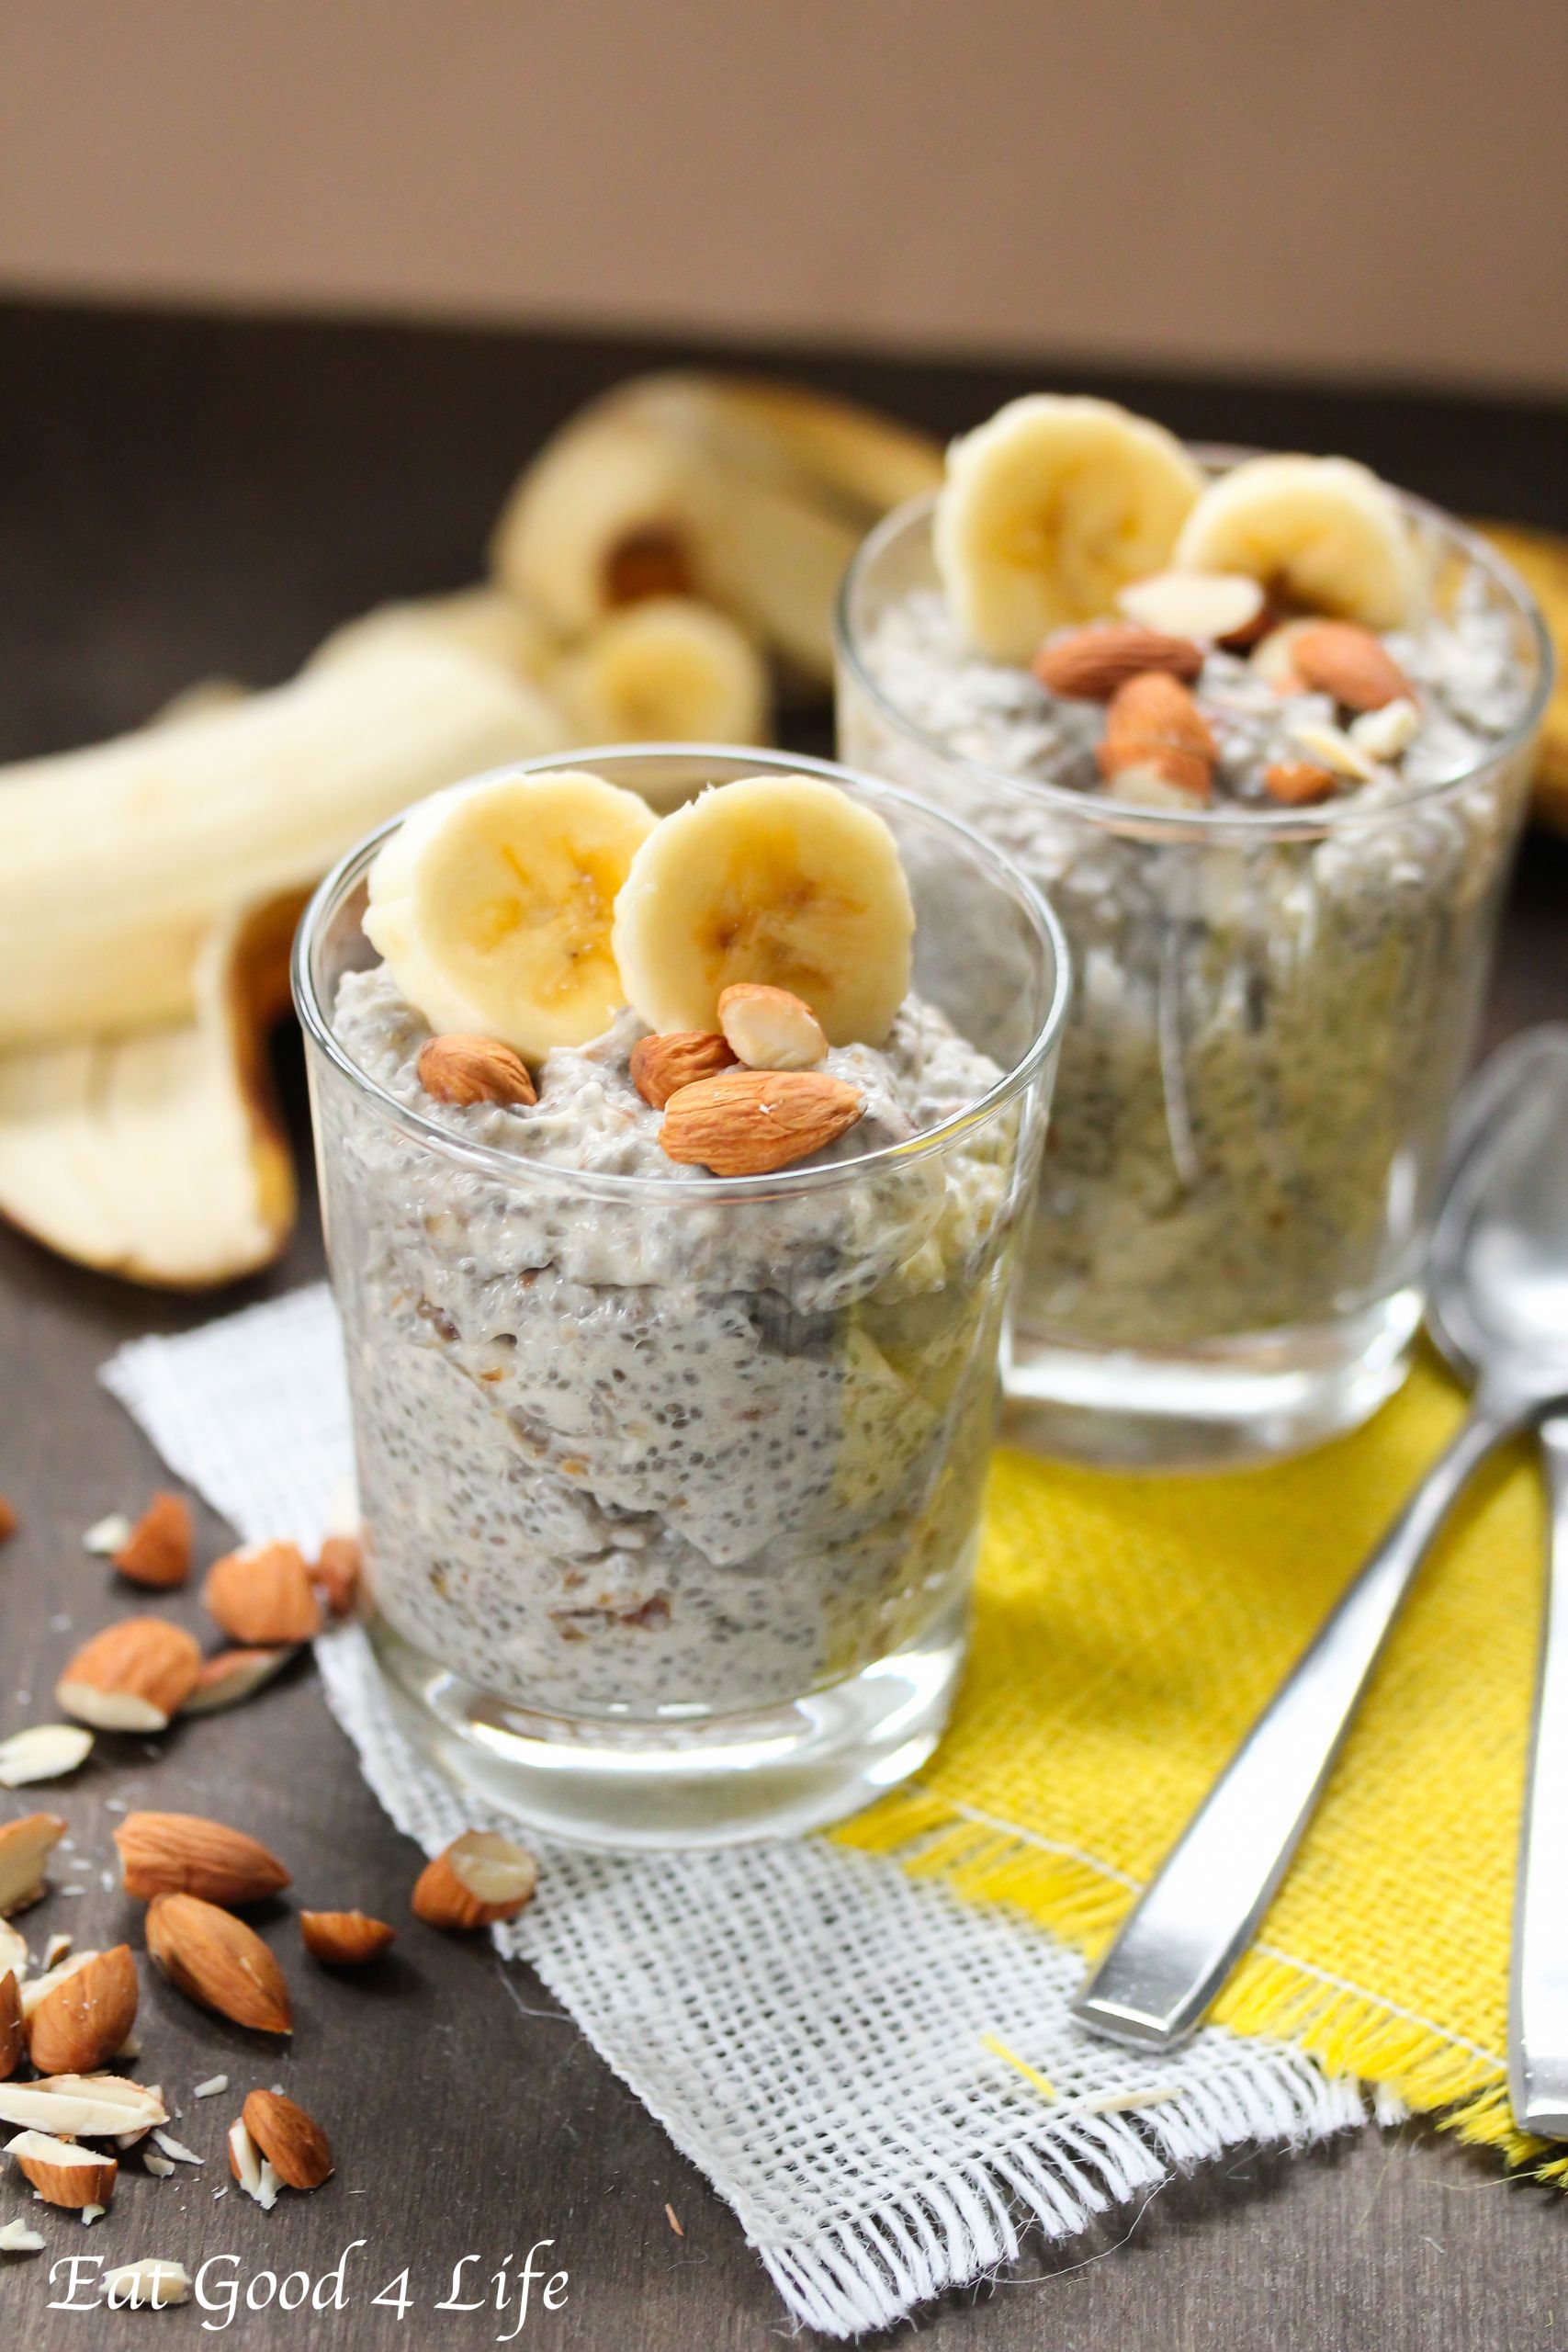 Chia Seed Breakfast Recipes
 banana chia seed pudding